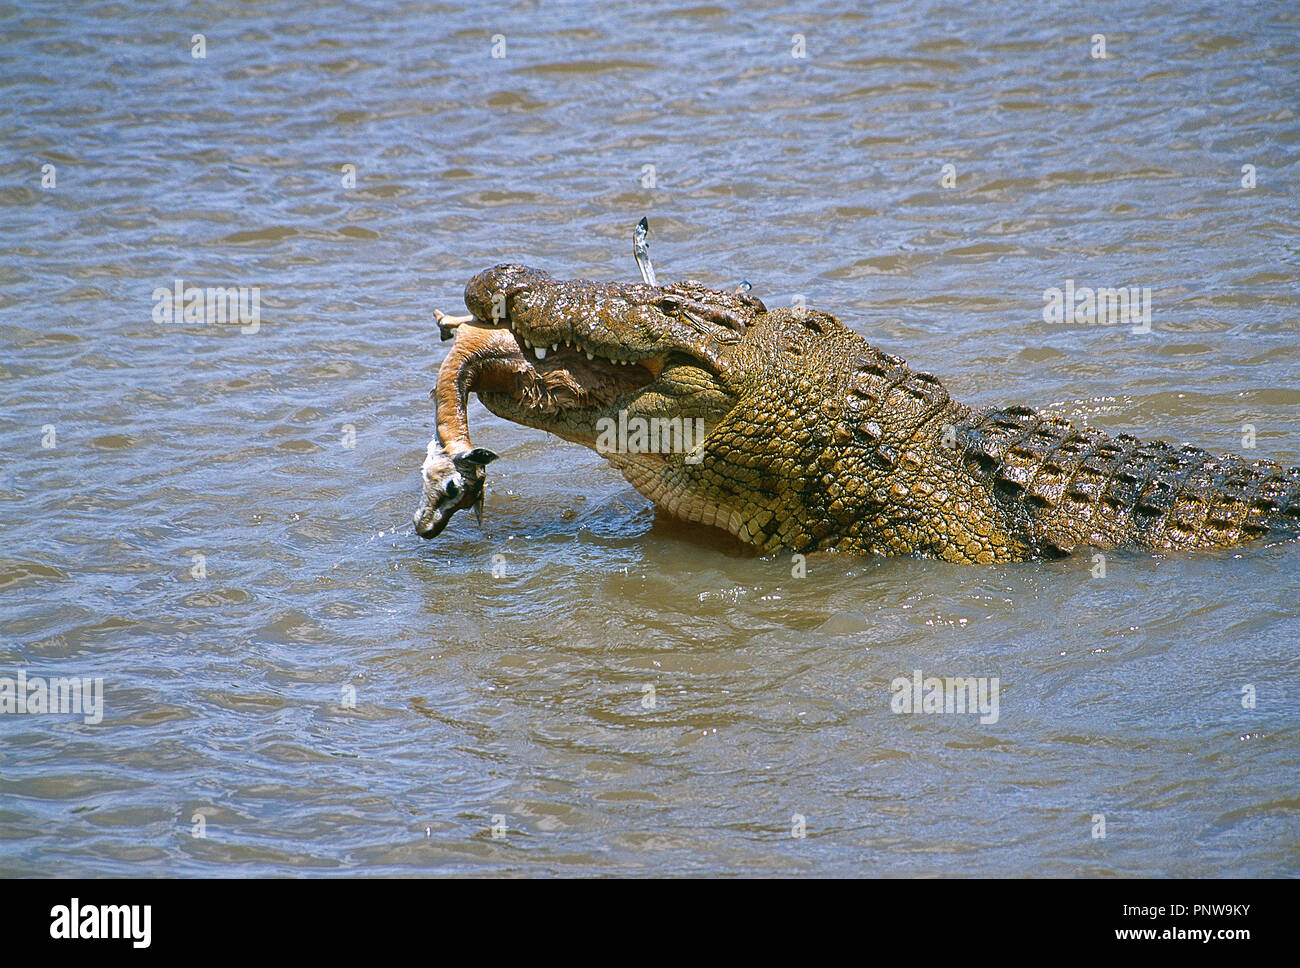 Kenya. Mara river. Crocodile with fresh kill in its jaws. Stock Photo